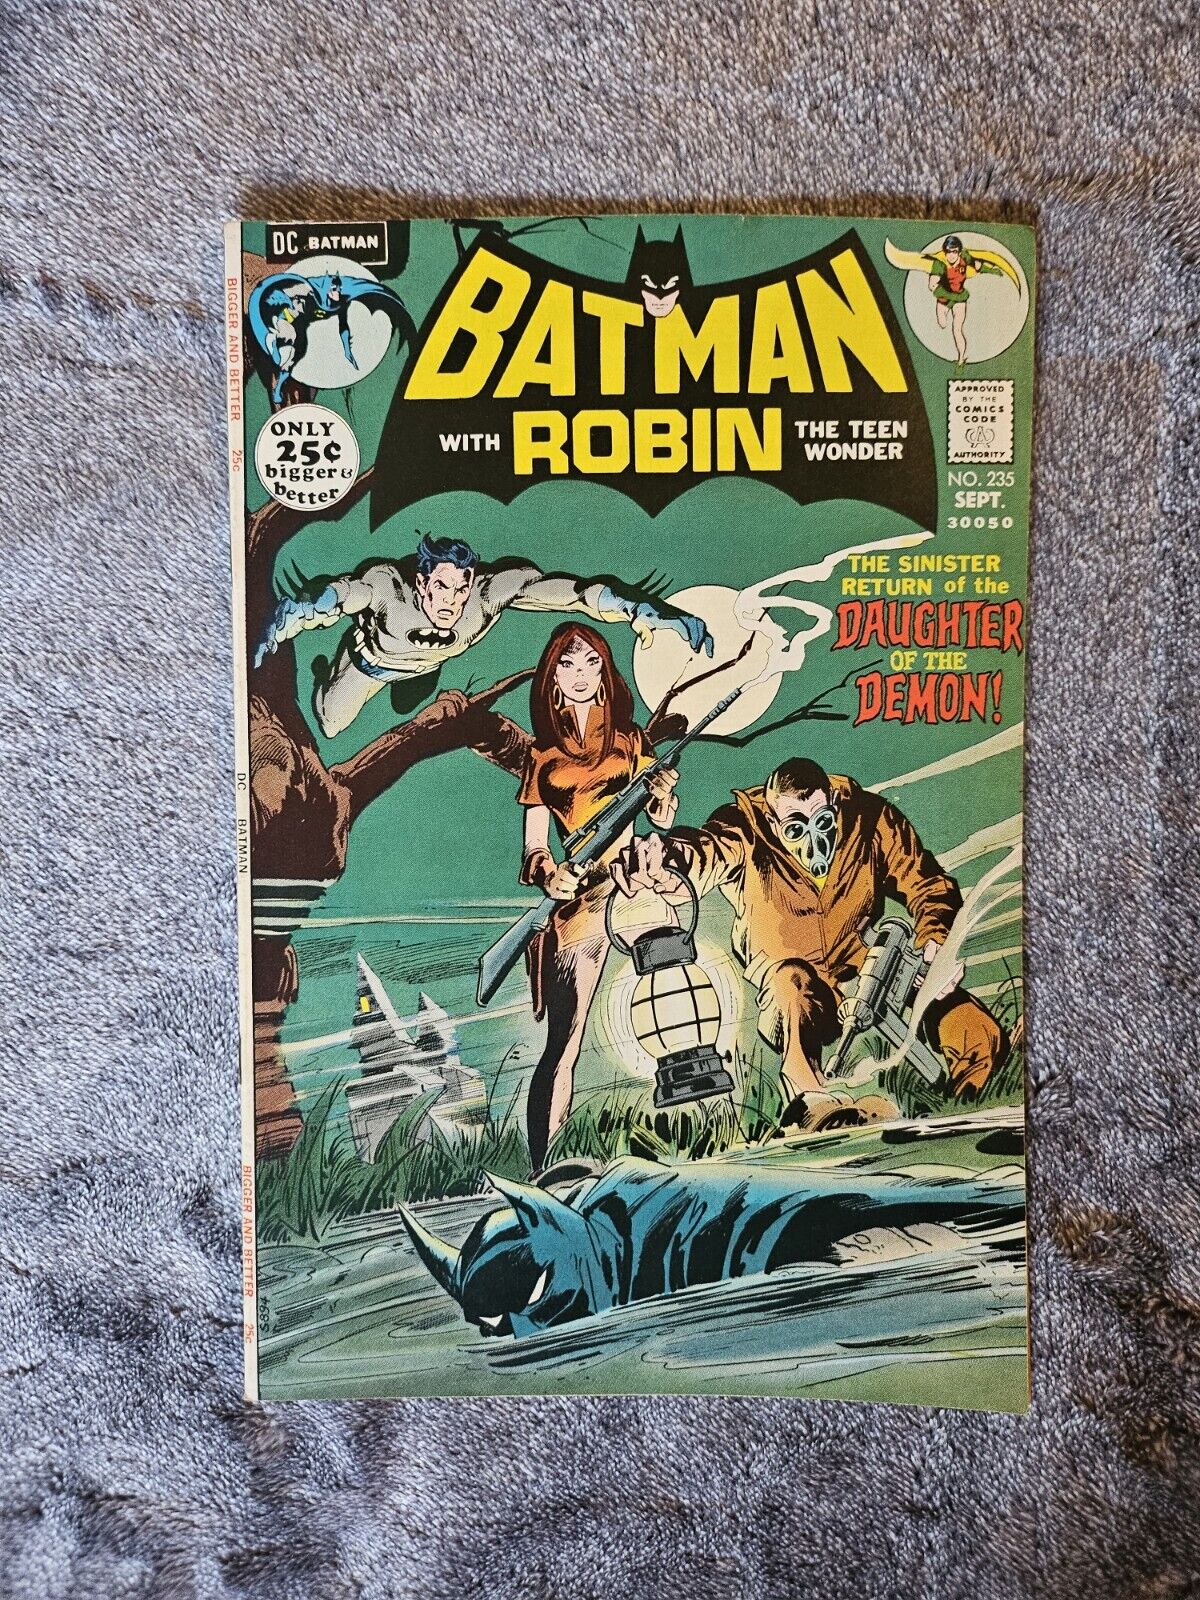 Batman #235 DC Comics 1971 2nd appearance of Ra's Al Ghul and daughter Talia